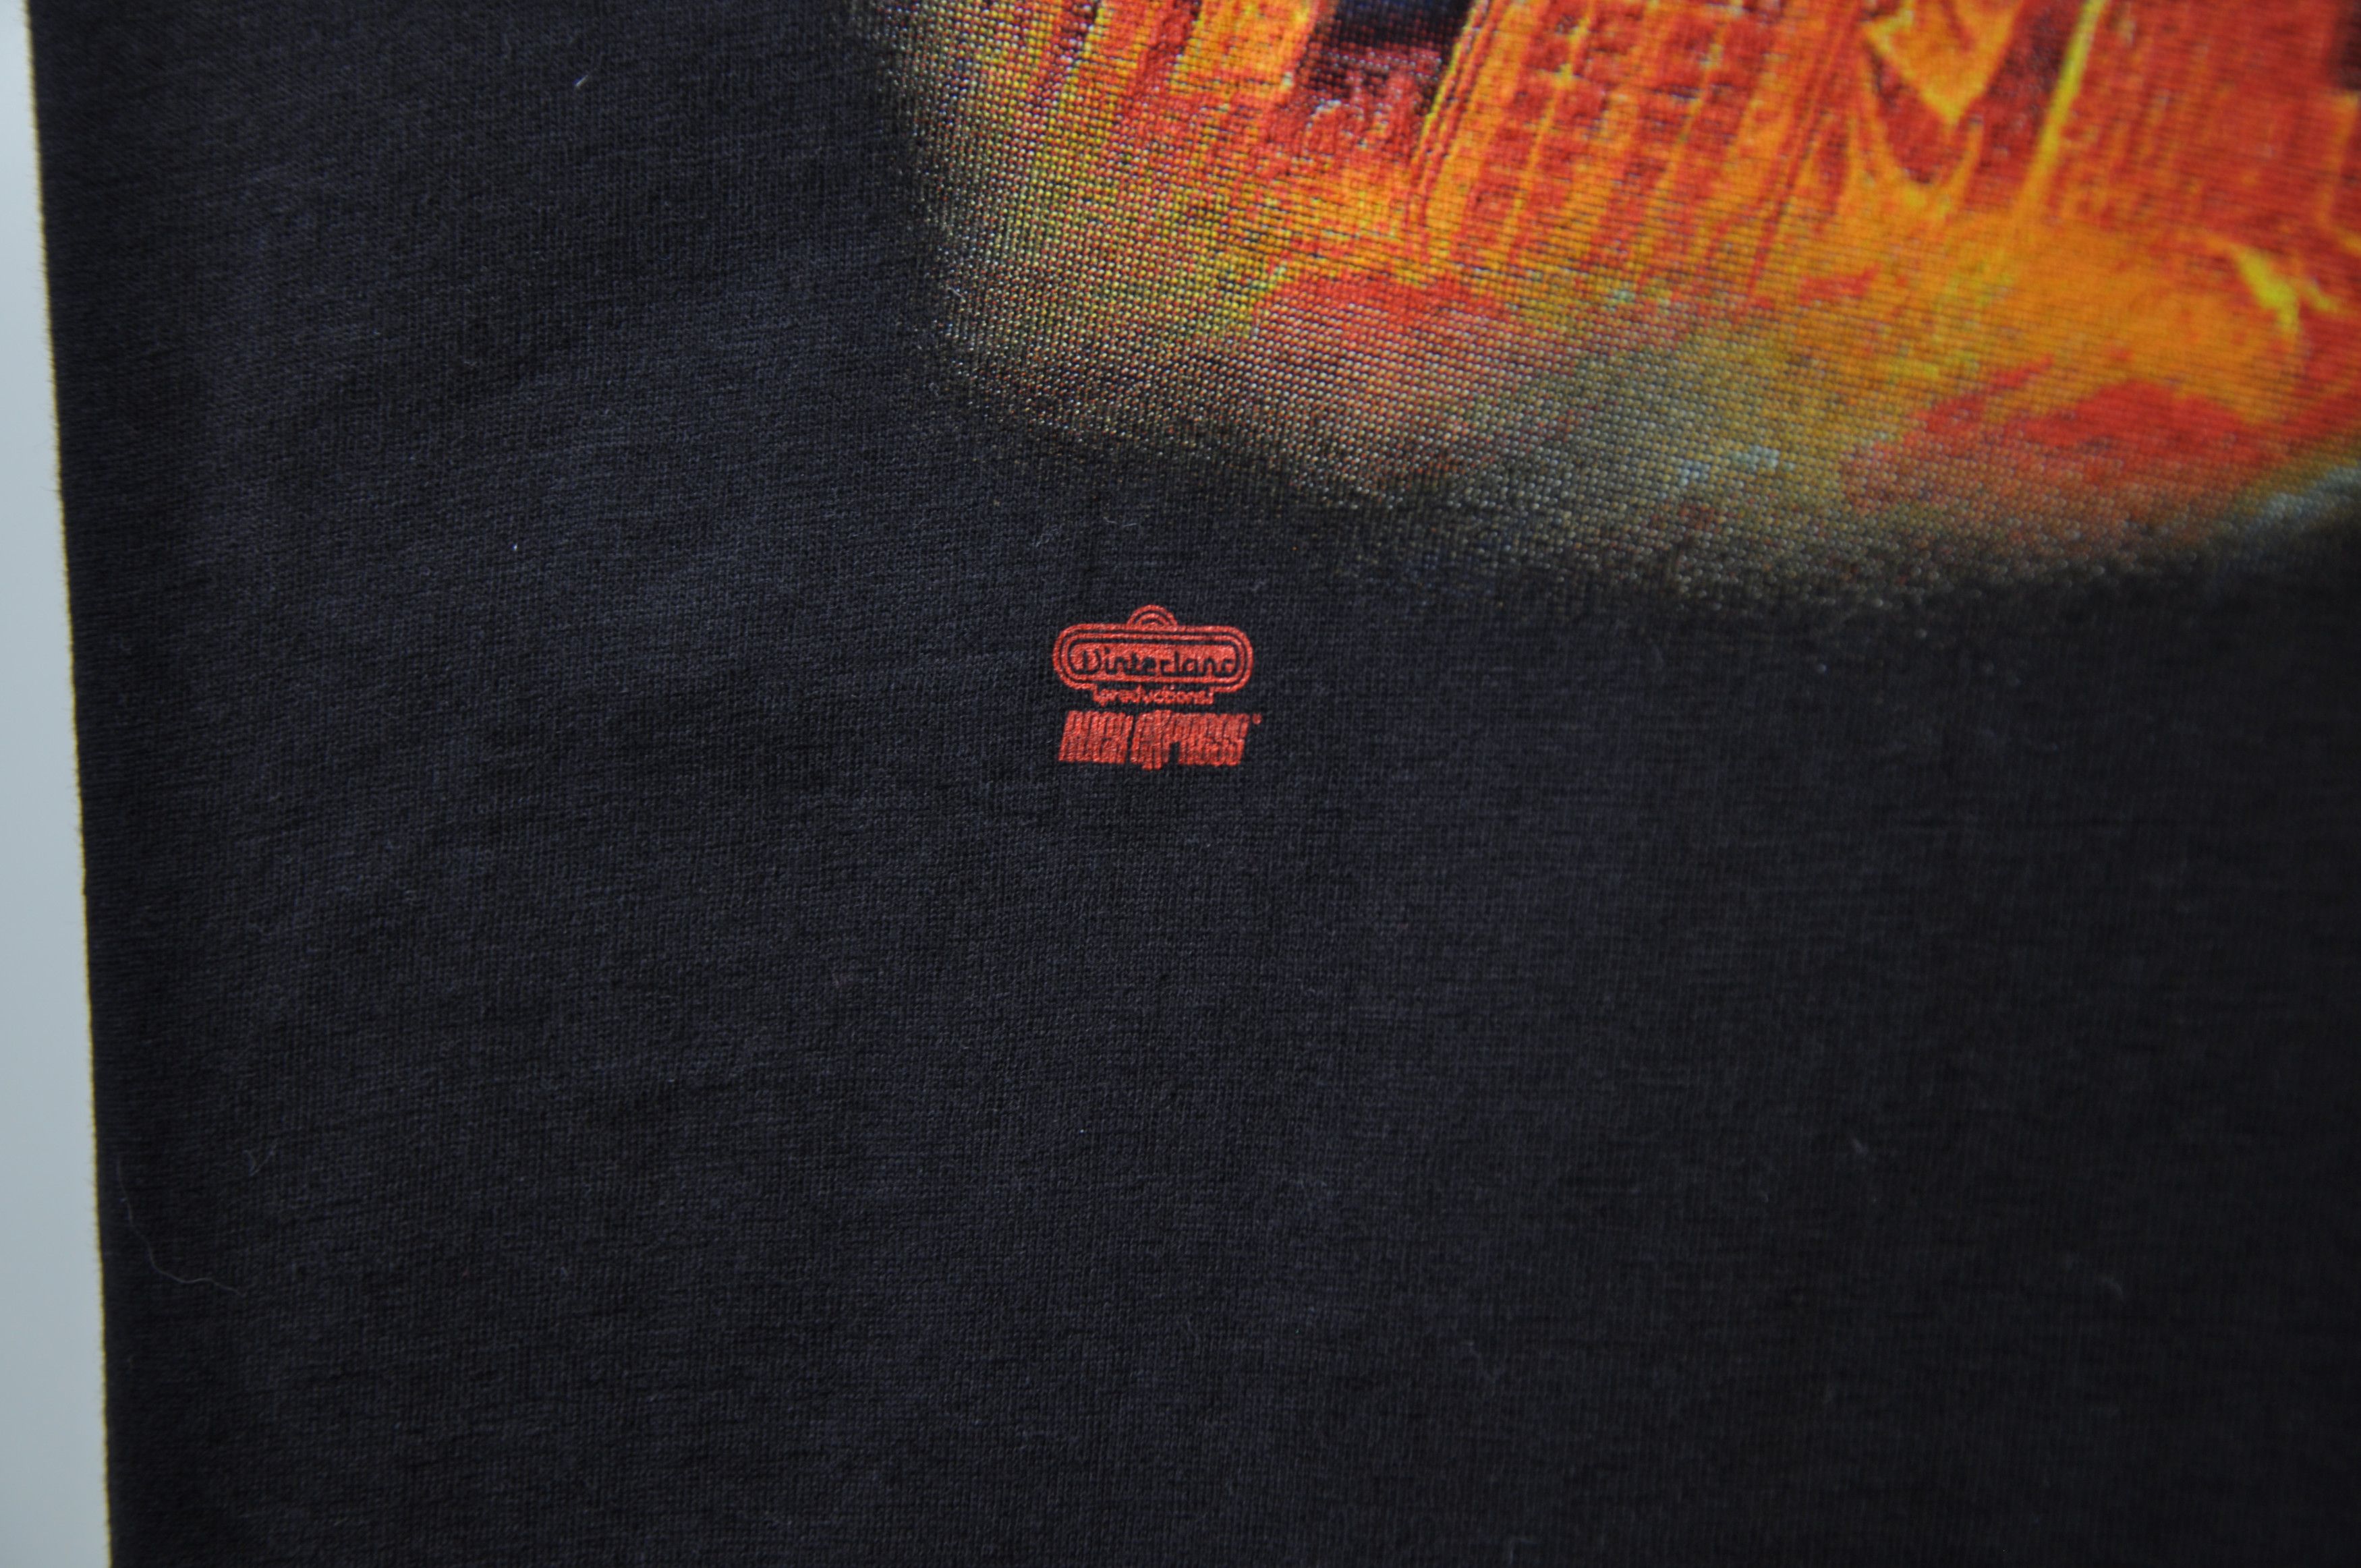 Vintage MEATLOAF 1993 Bat Out Of Hell 2 Tour T Shirt SIZE XL Size US XL / EU 56 / 4 - 4 Thumbnail